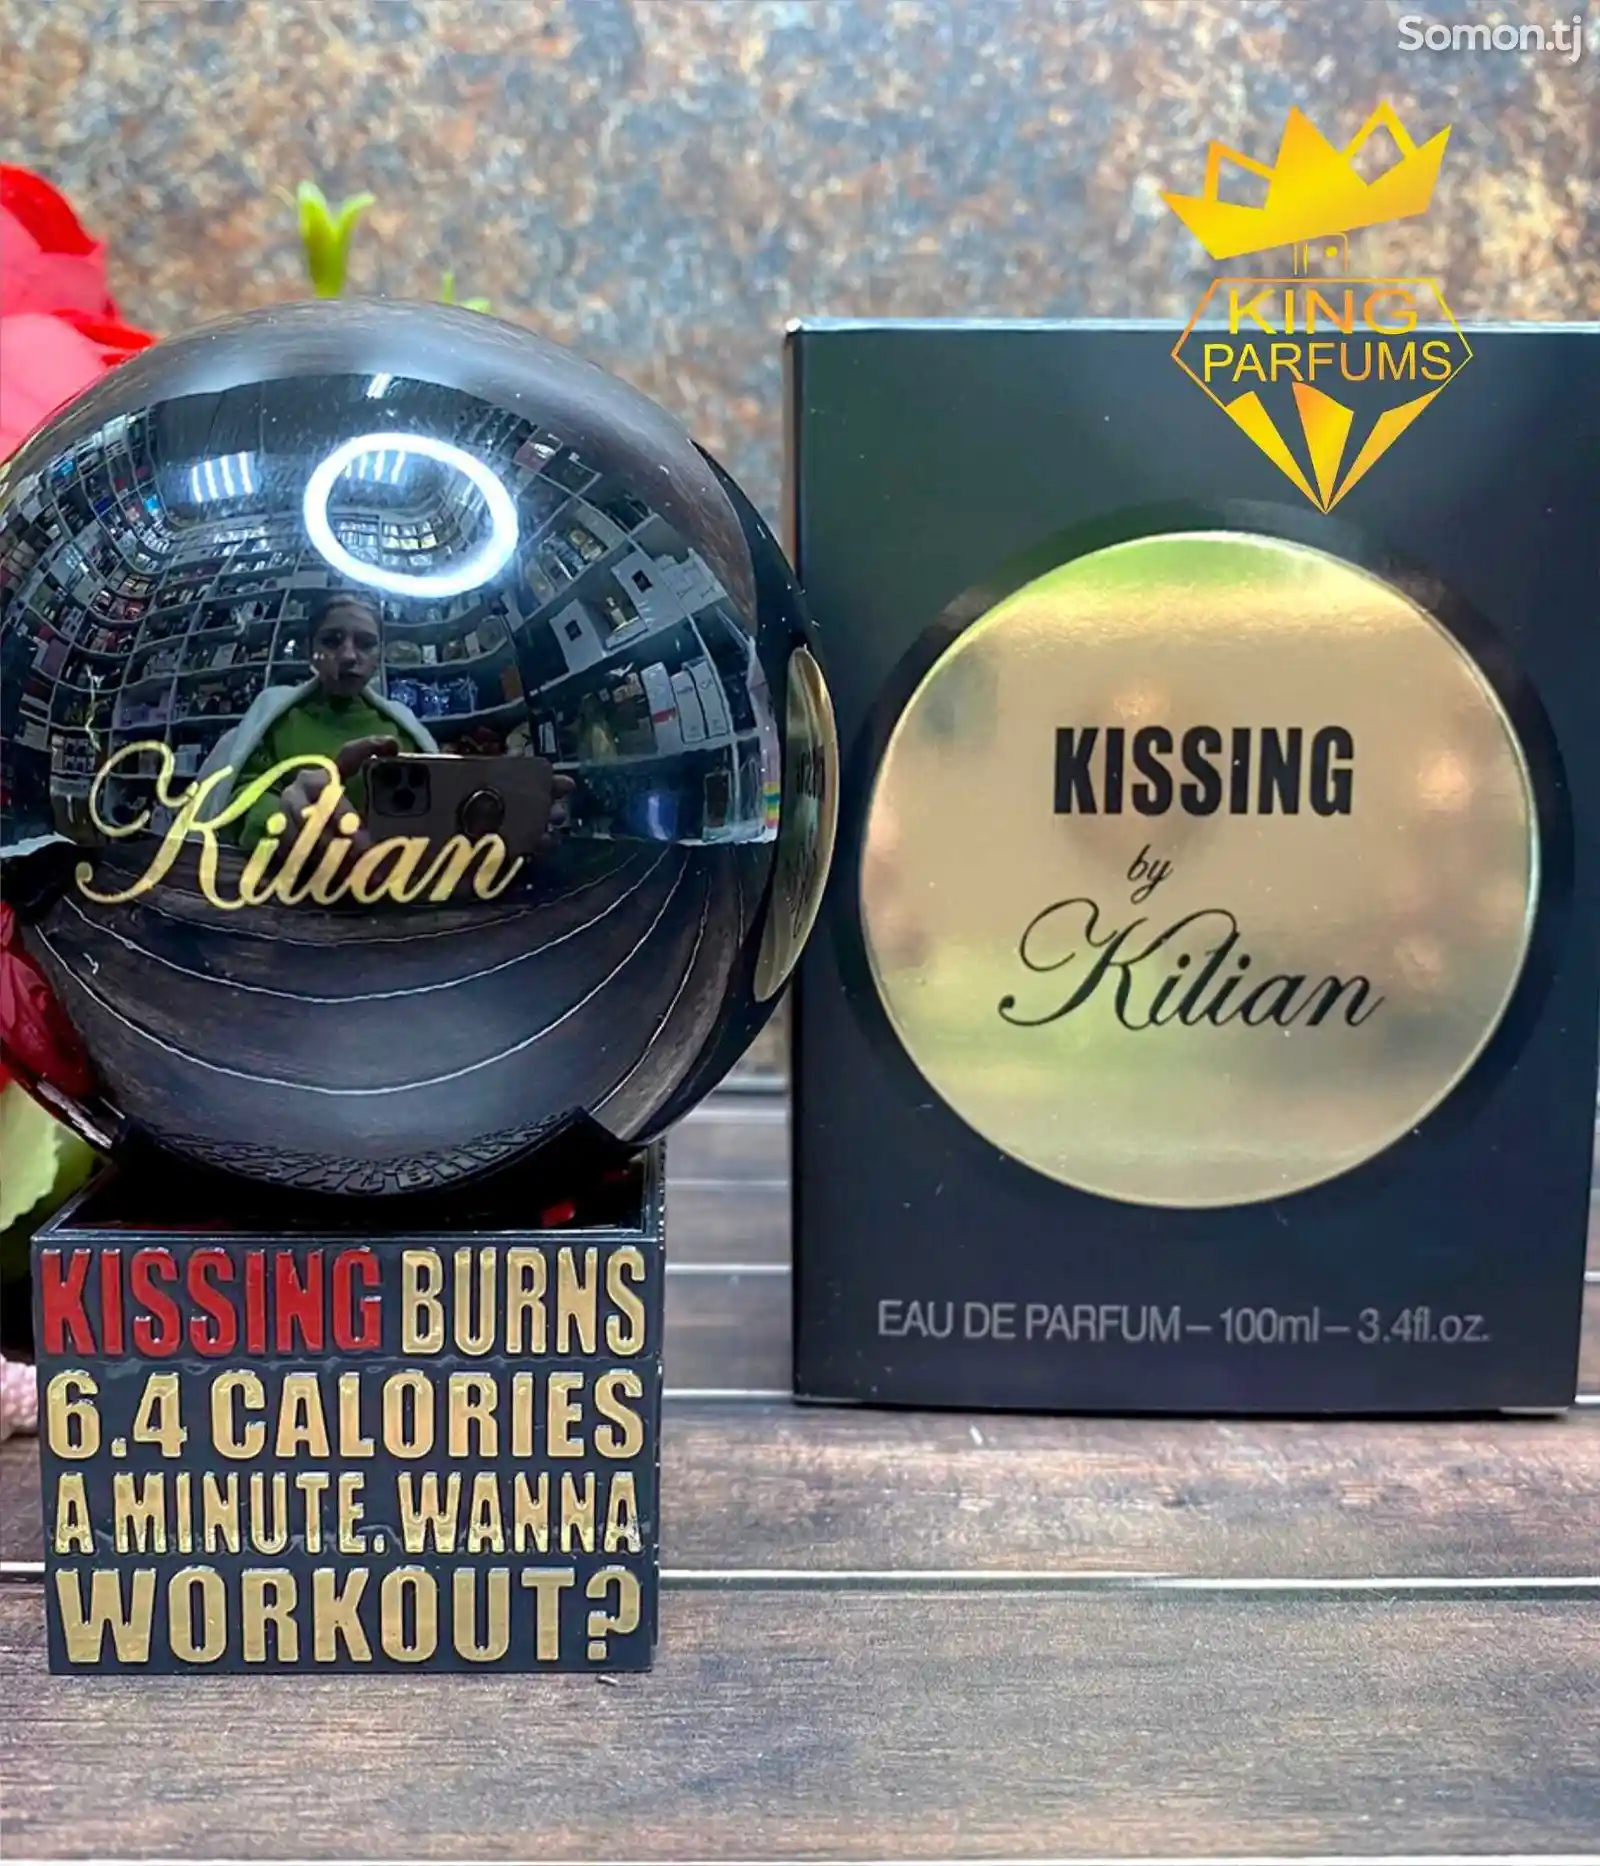 Парфюм Kissing burns 6.4 calories a minute by kilian-4